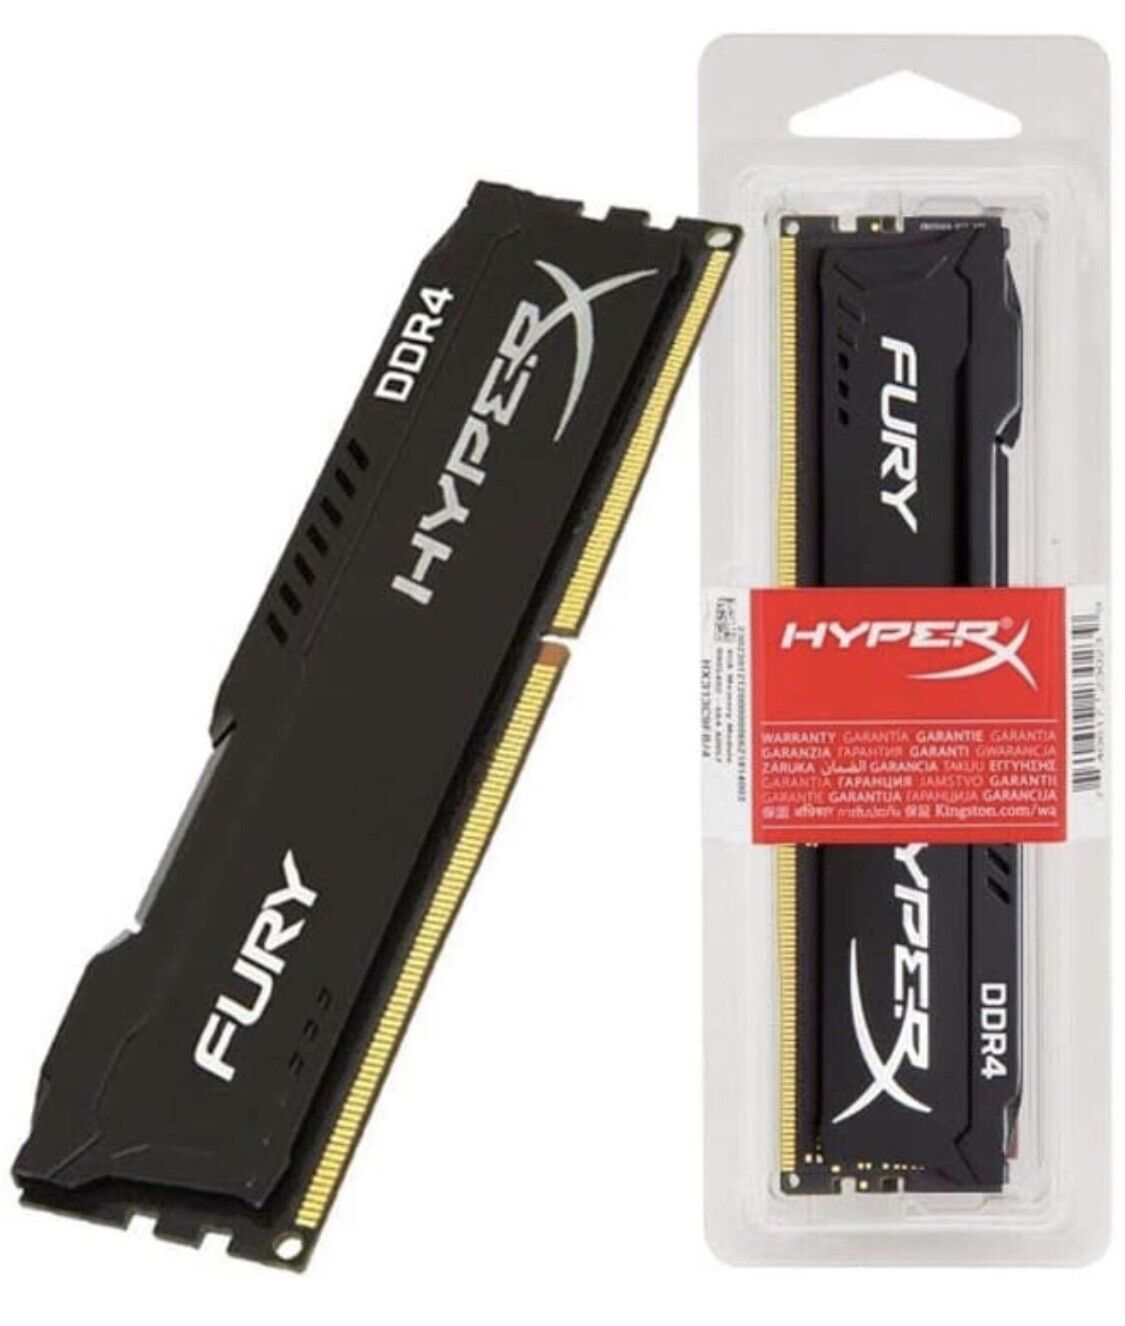 HyperX Kingston Technology Fury Black 8 GB DDR4 (HX424C15FB2/8)